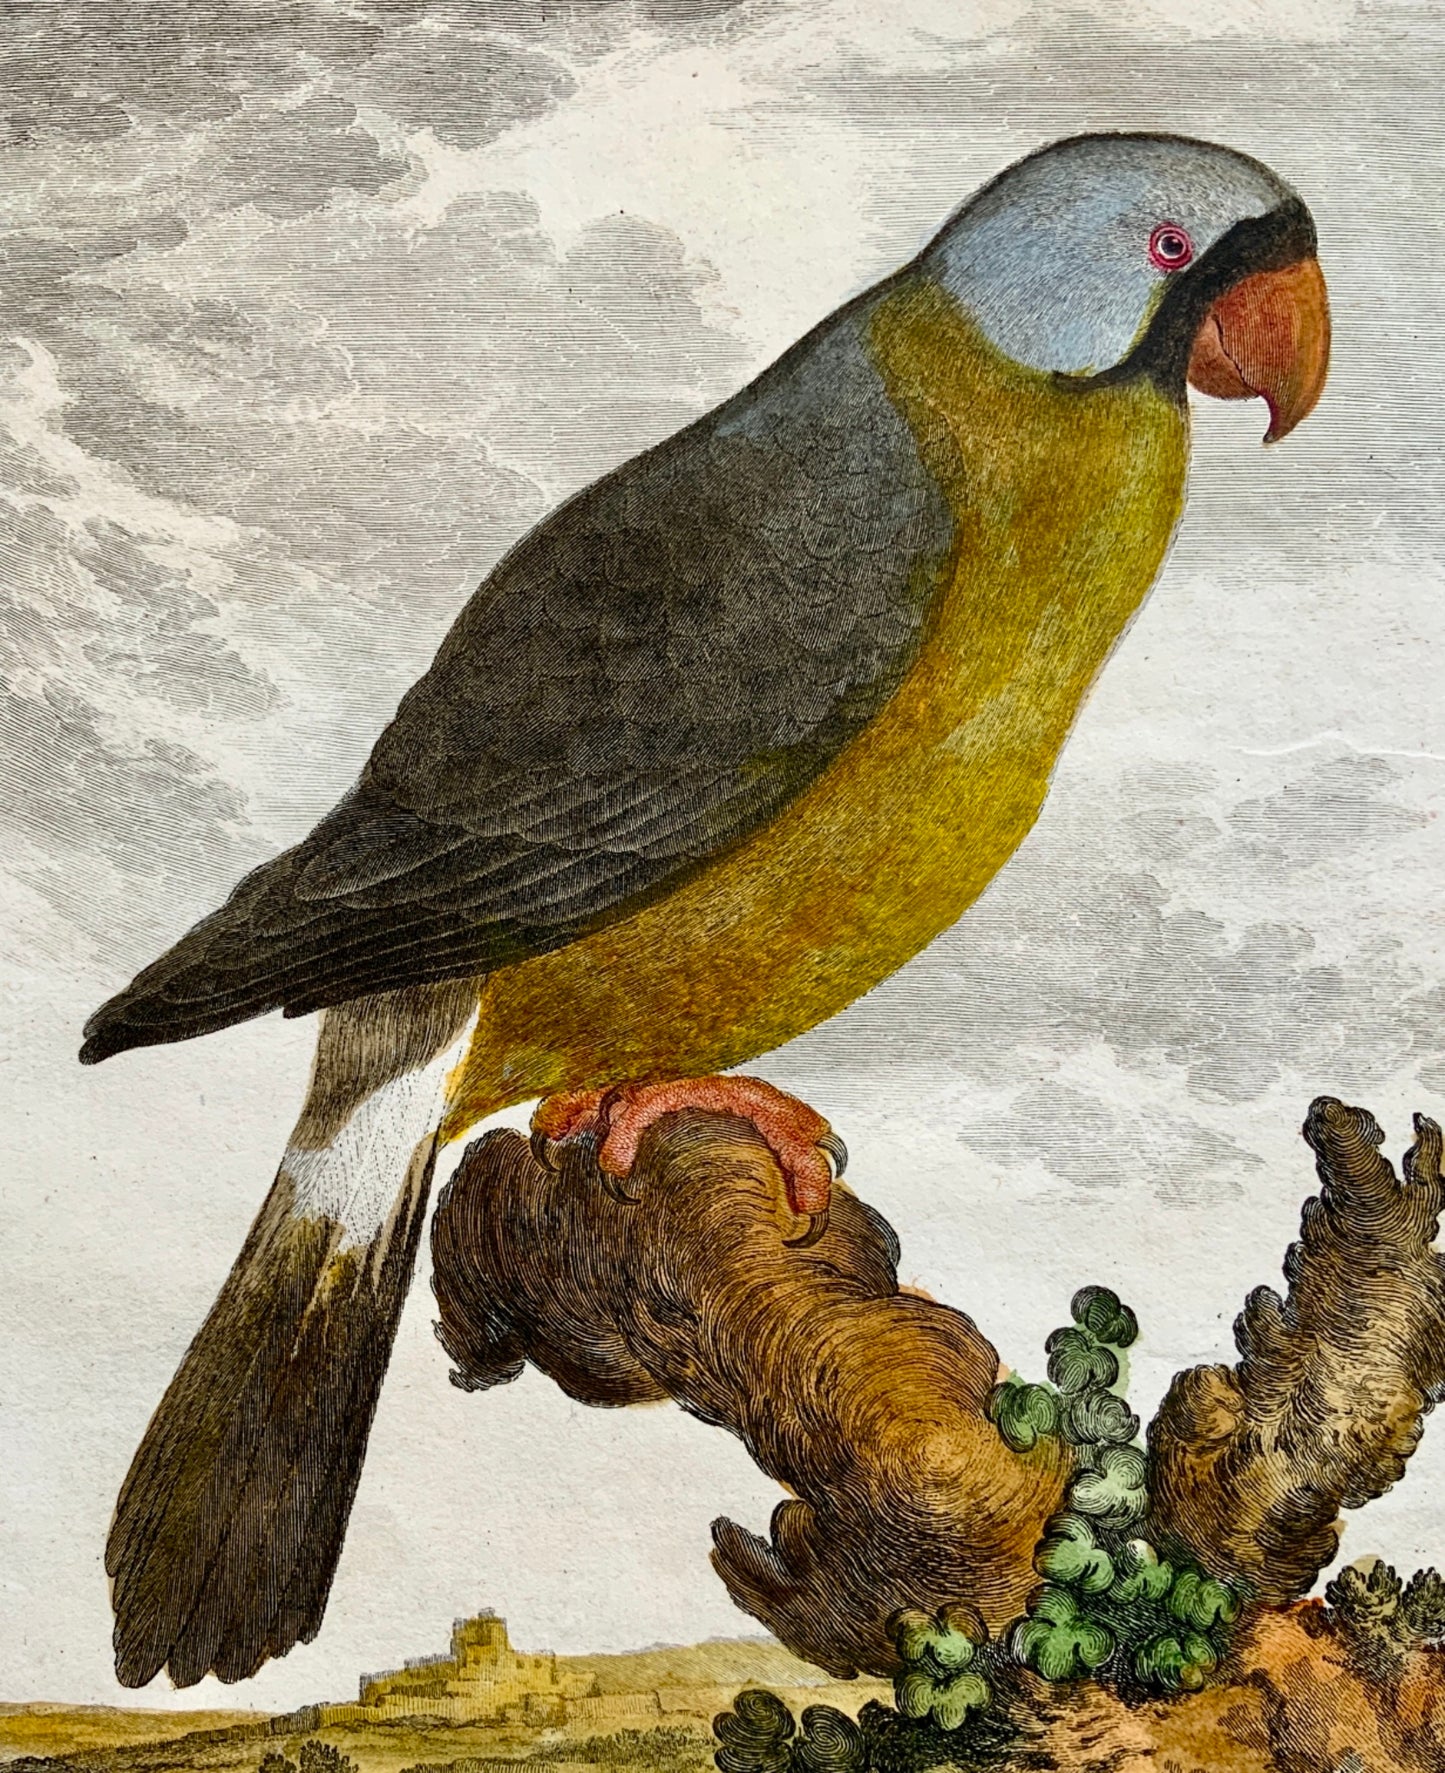 1779 Haussard after Jacques de Seve - Mascarene Parrot - 4to engraving - Ornithology